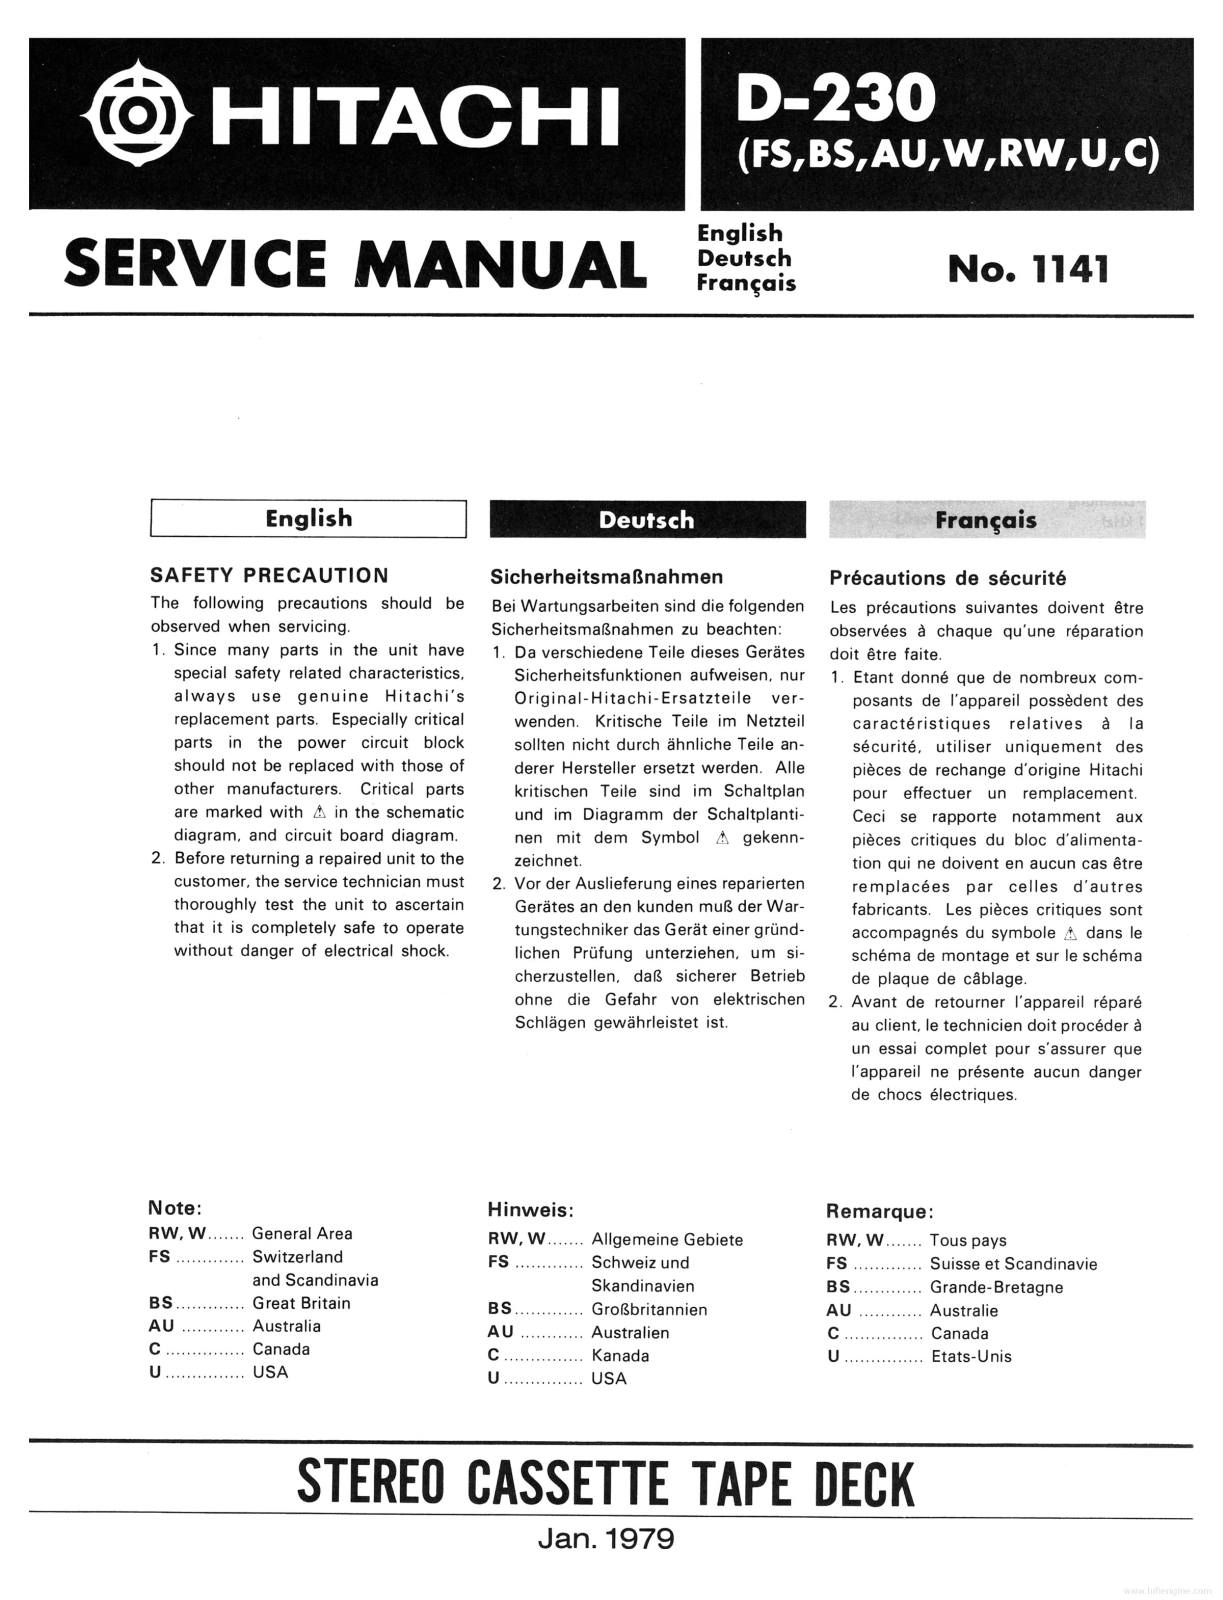 Hitachi d 230 Service Manual